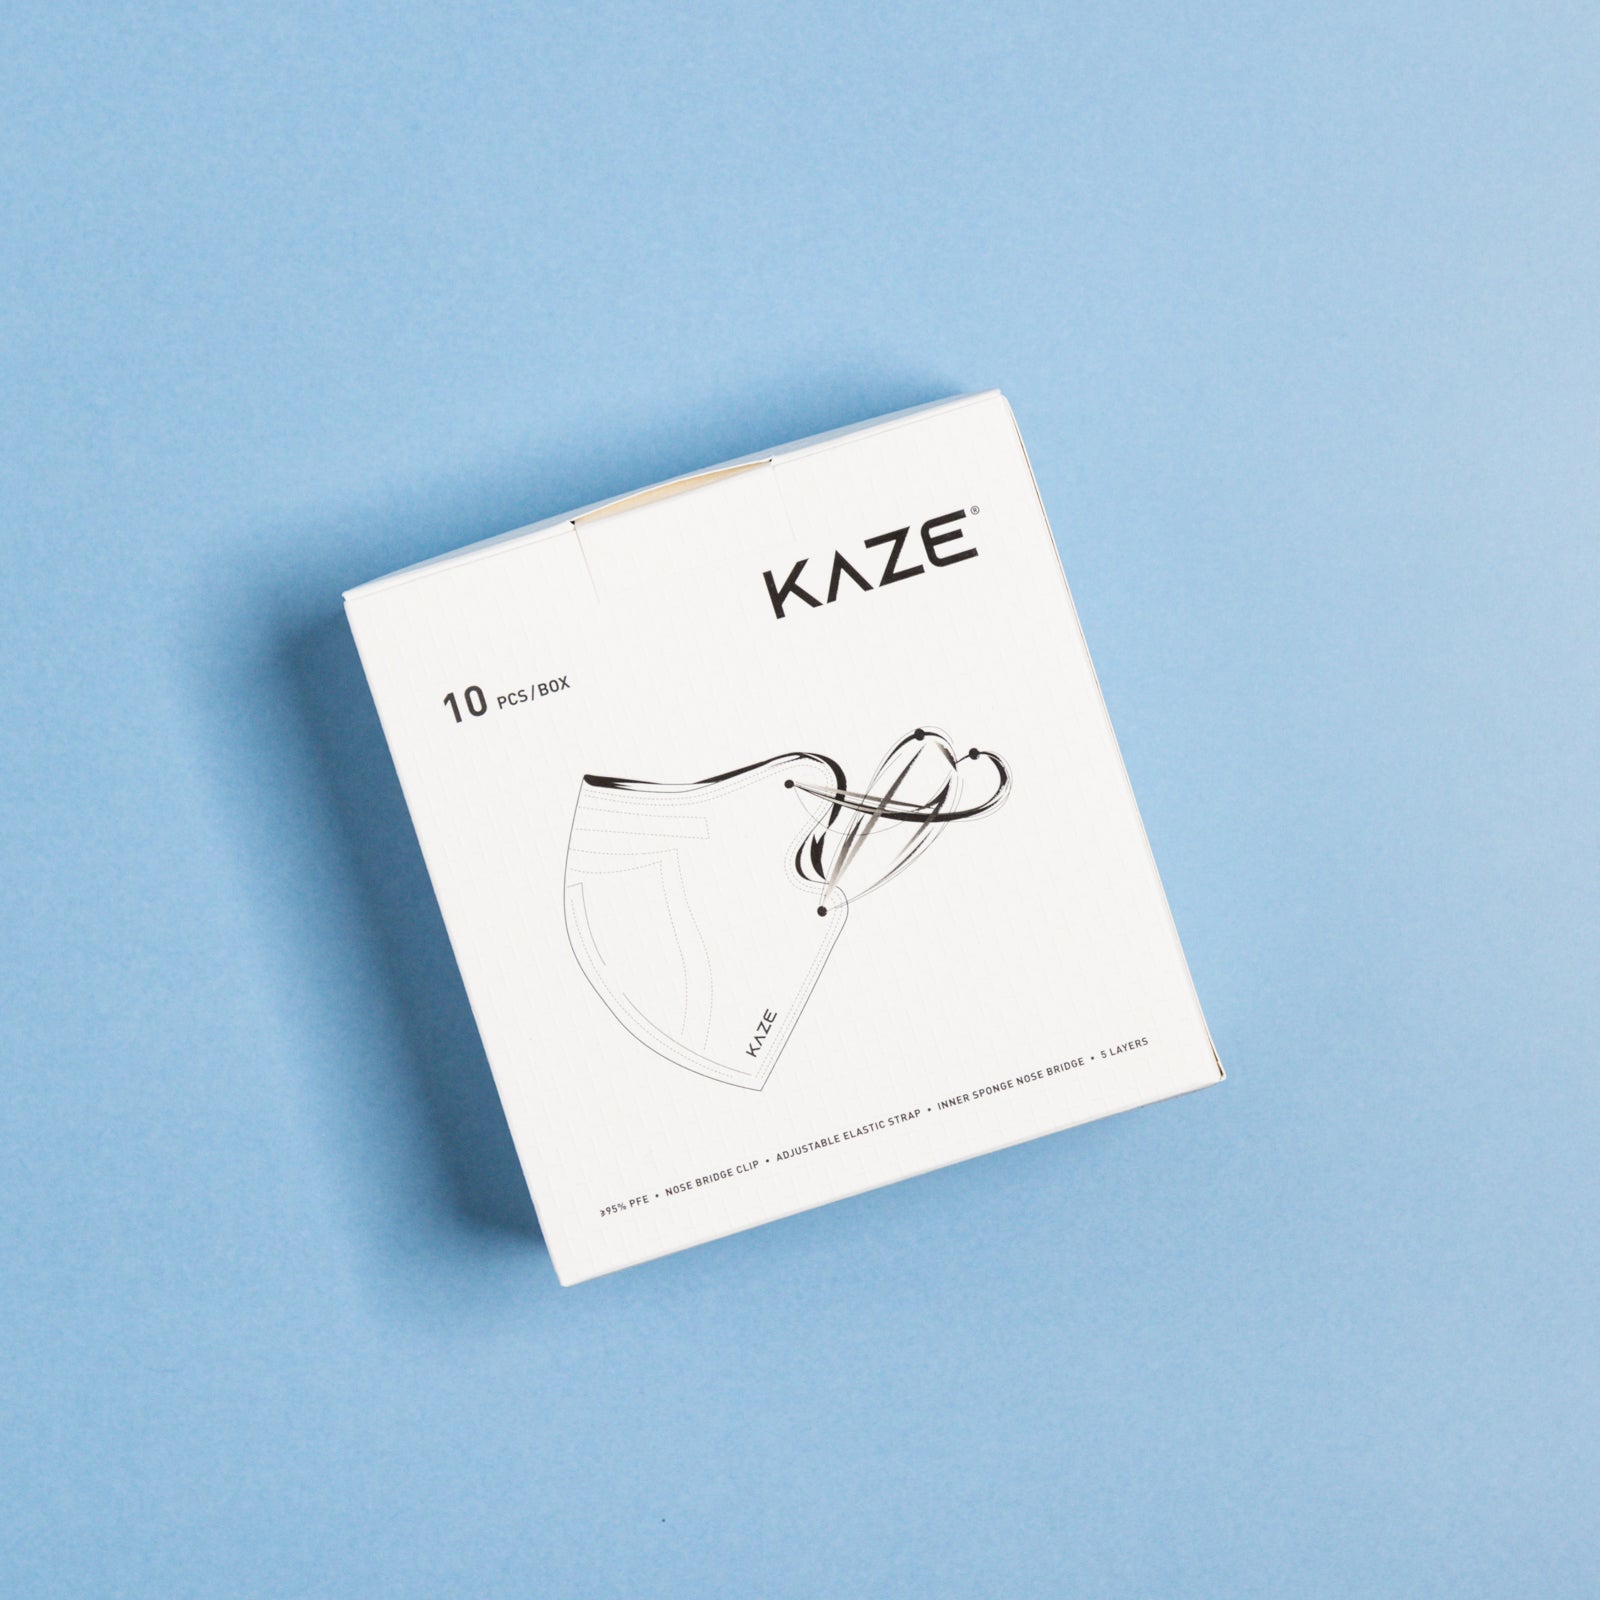 KAZE Masks- Mini Azure Series